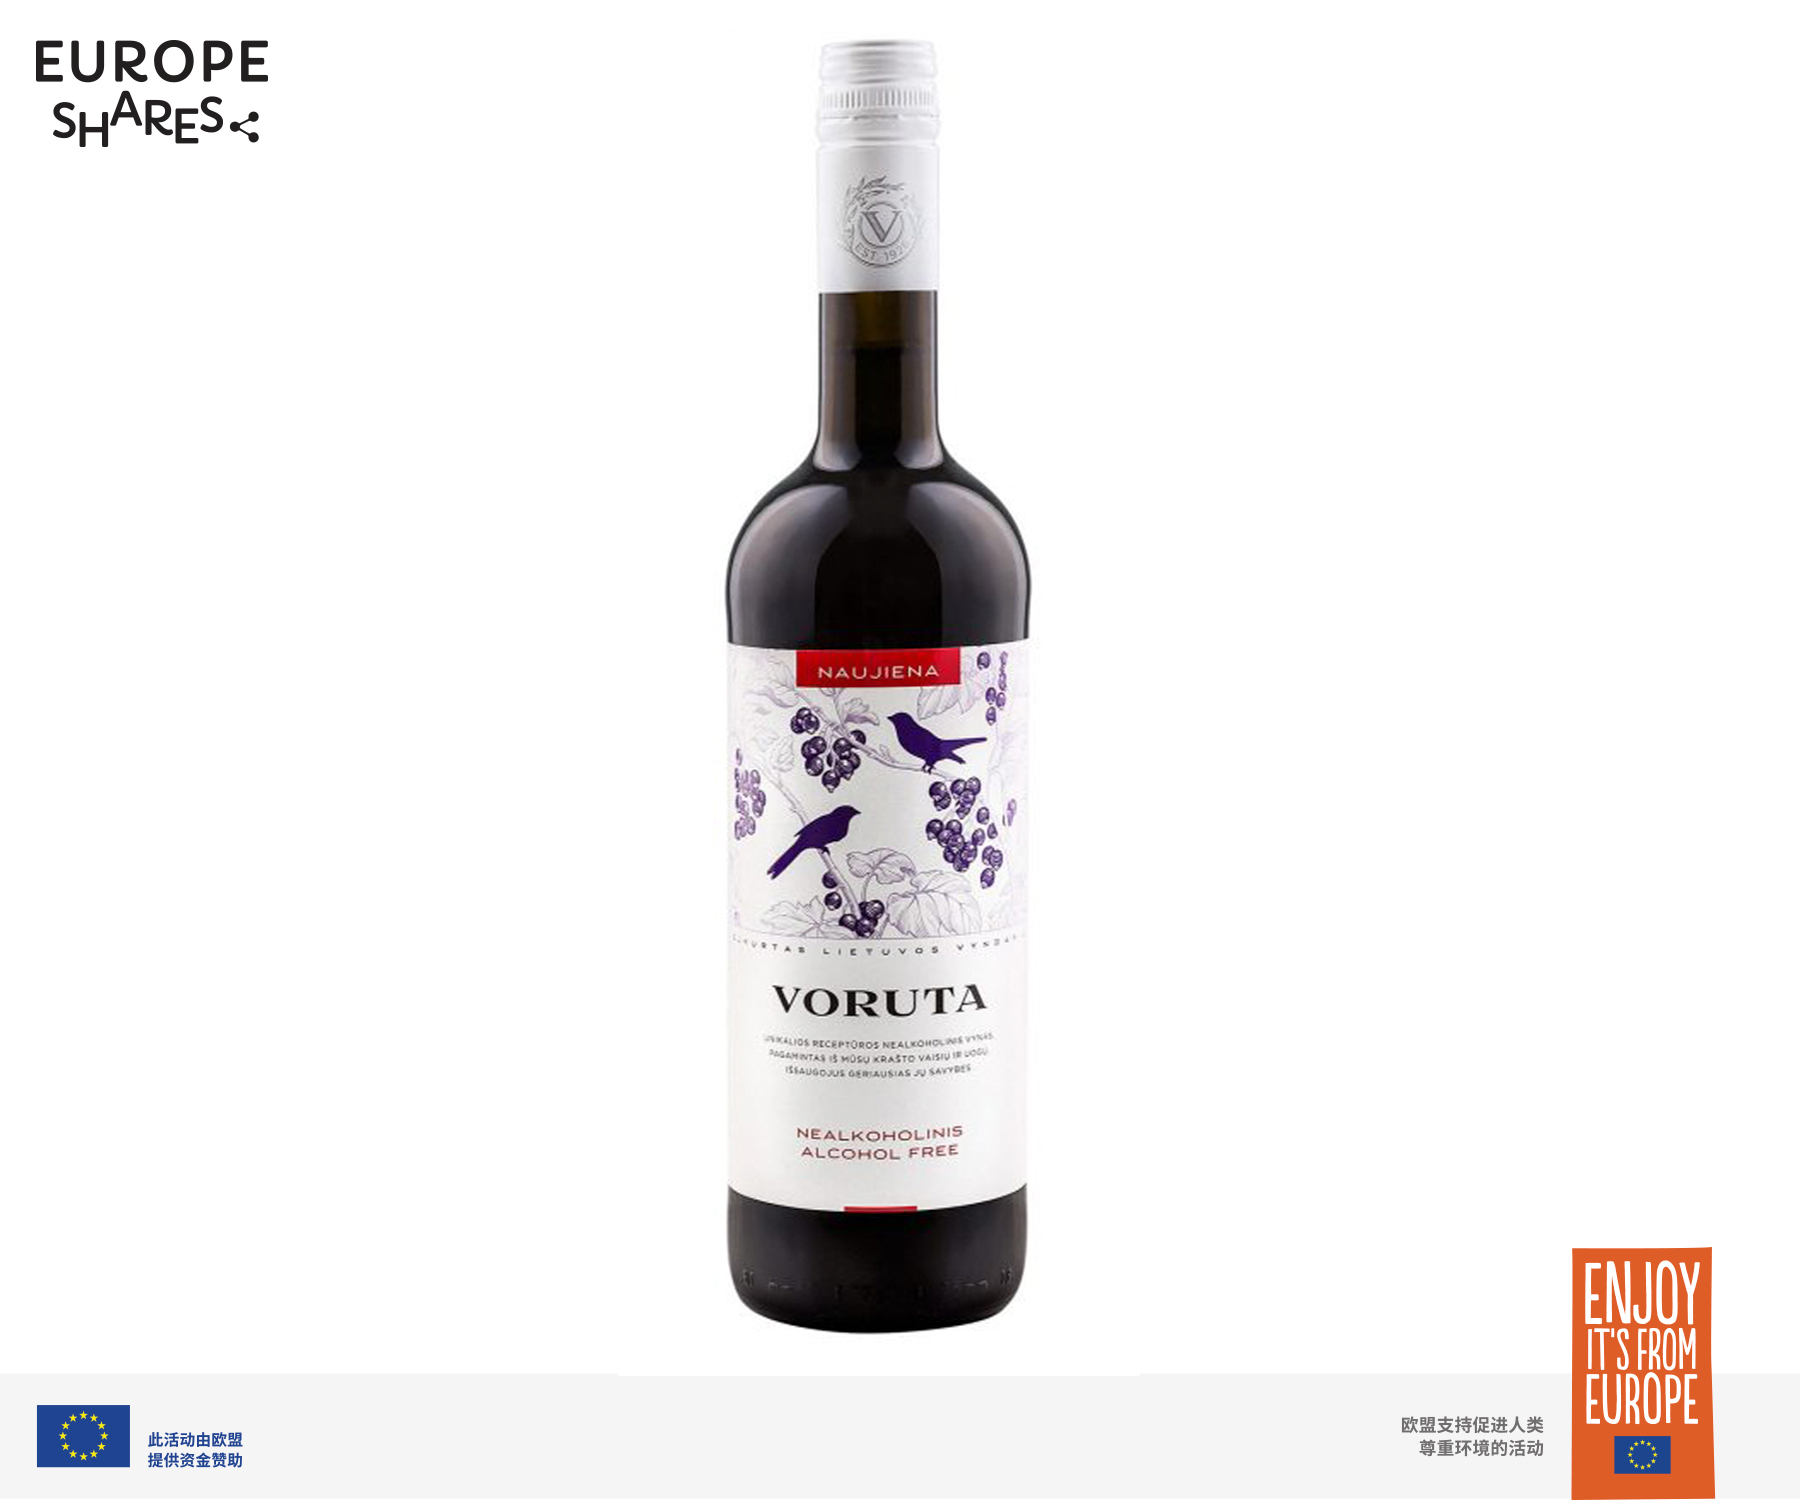 VORUTA_Alcoholfree-Natural alcohol-free black currant wine